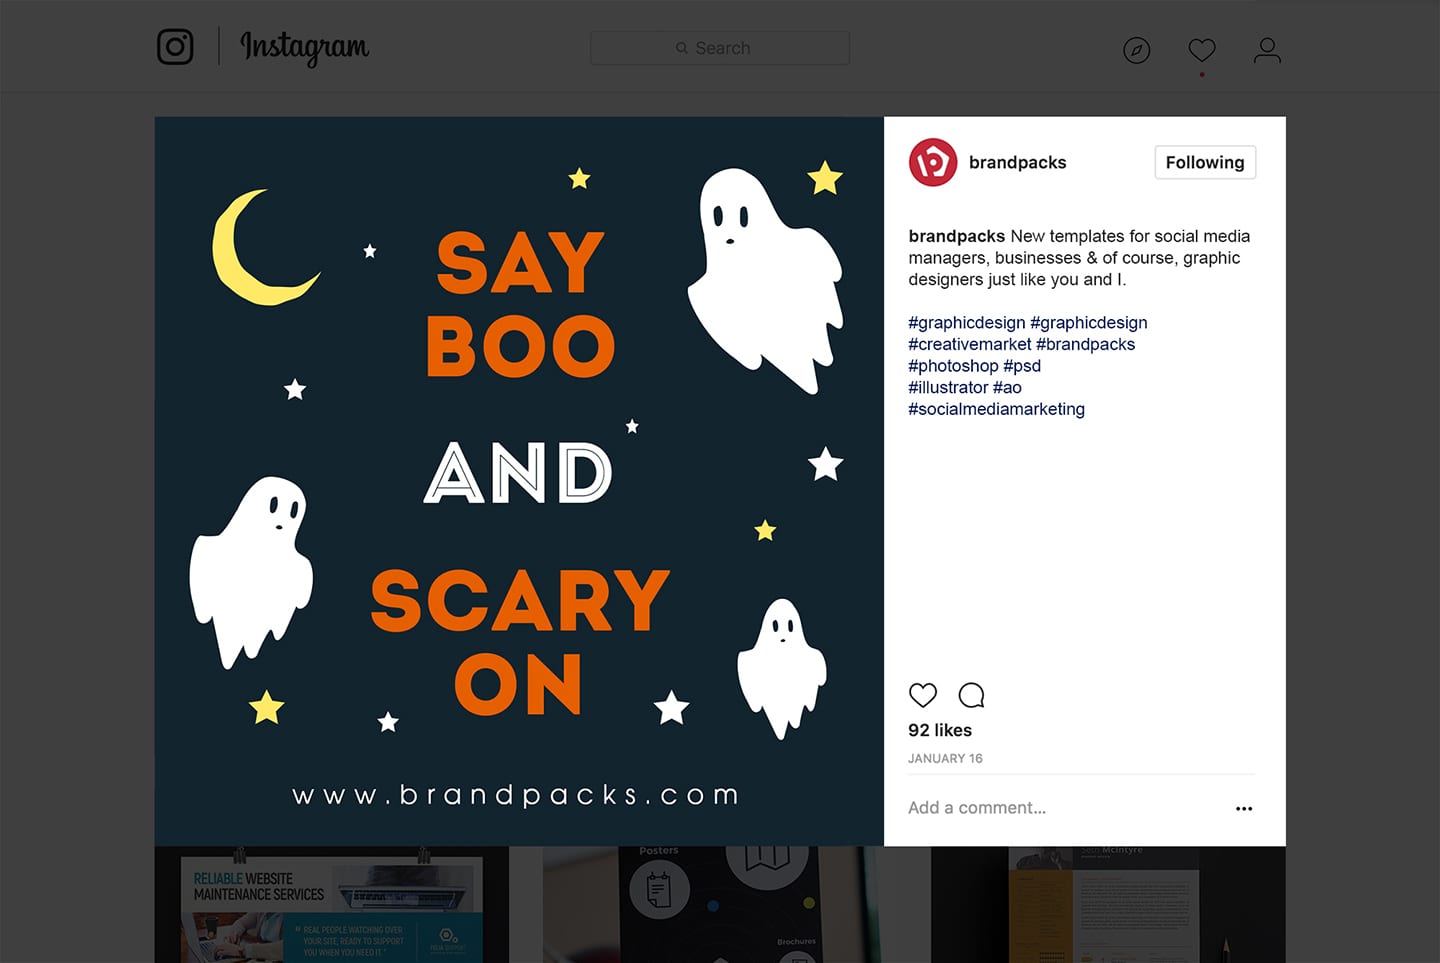 Halloween Social Media Templates